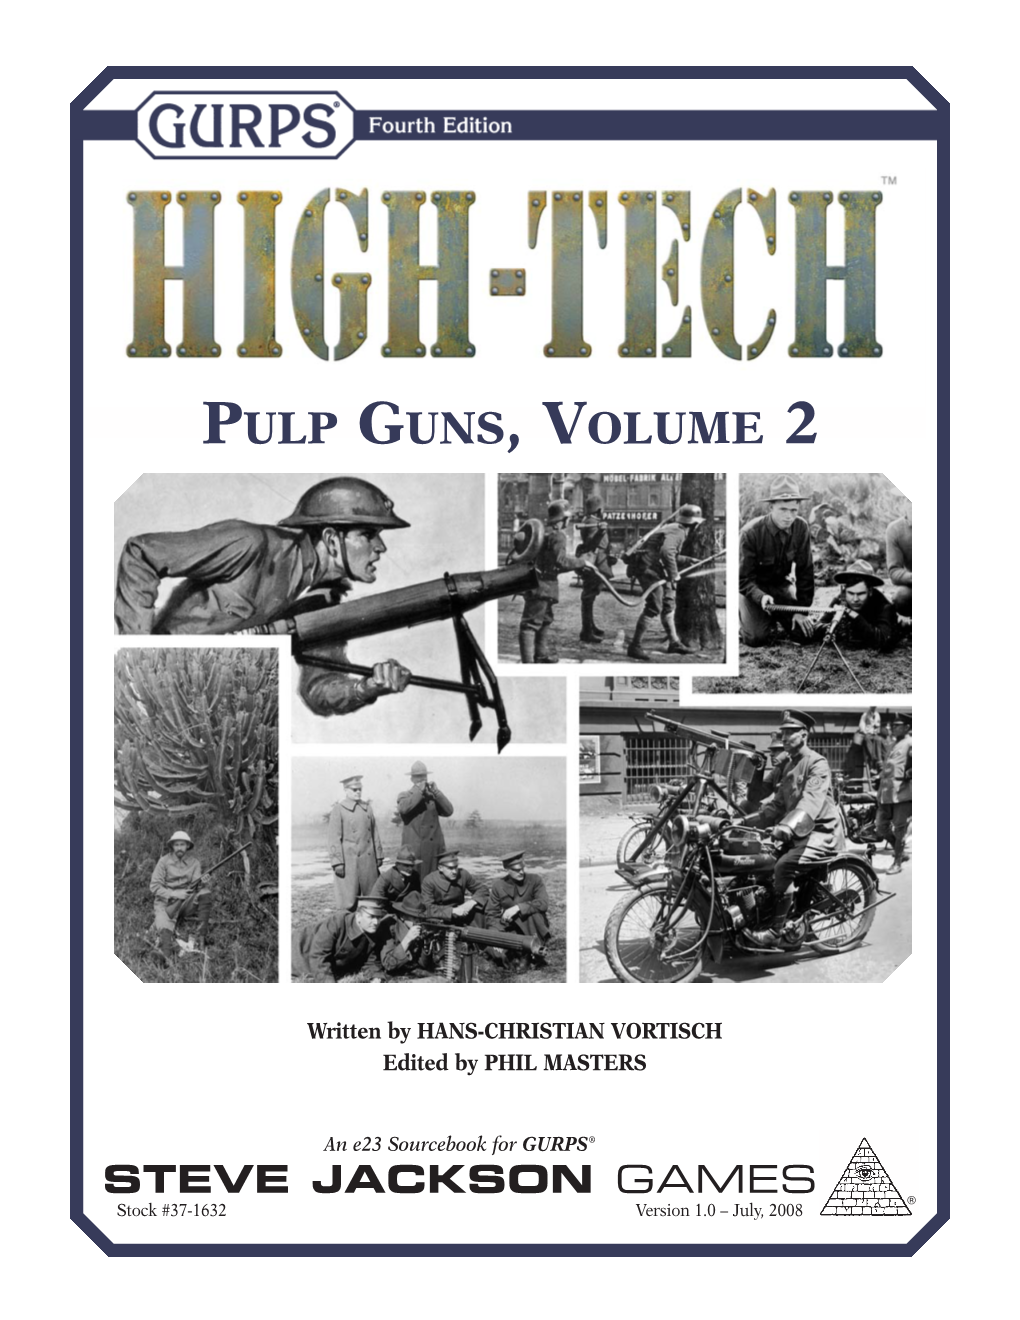 Pulp Guns, Volume 2